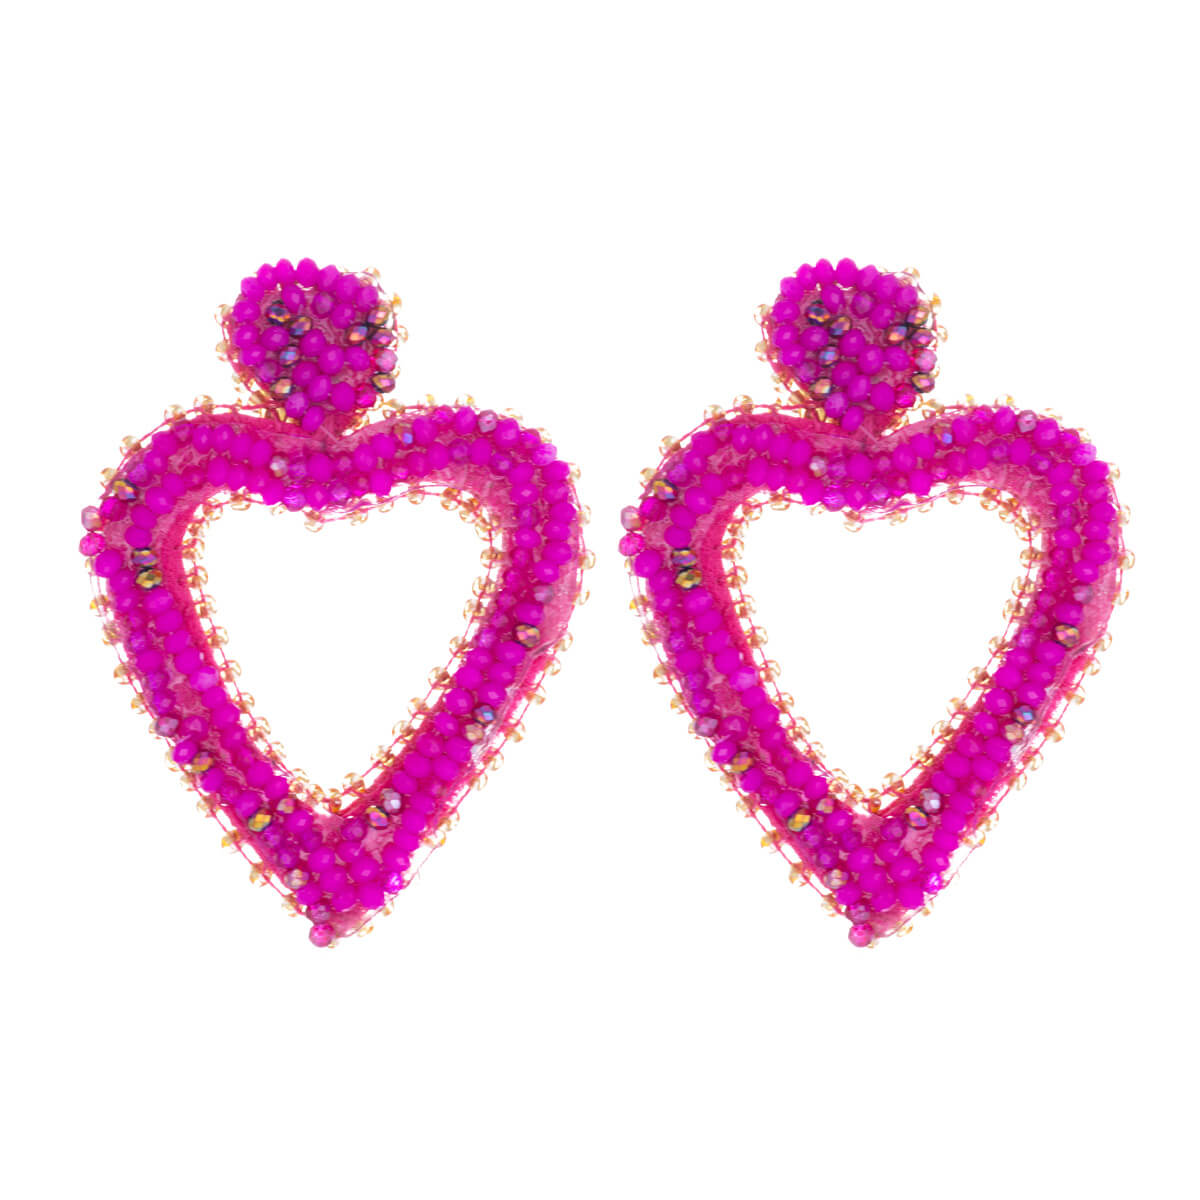 Felt heart earrings with glass stones